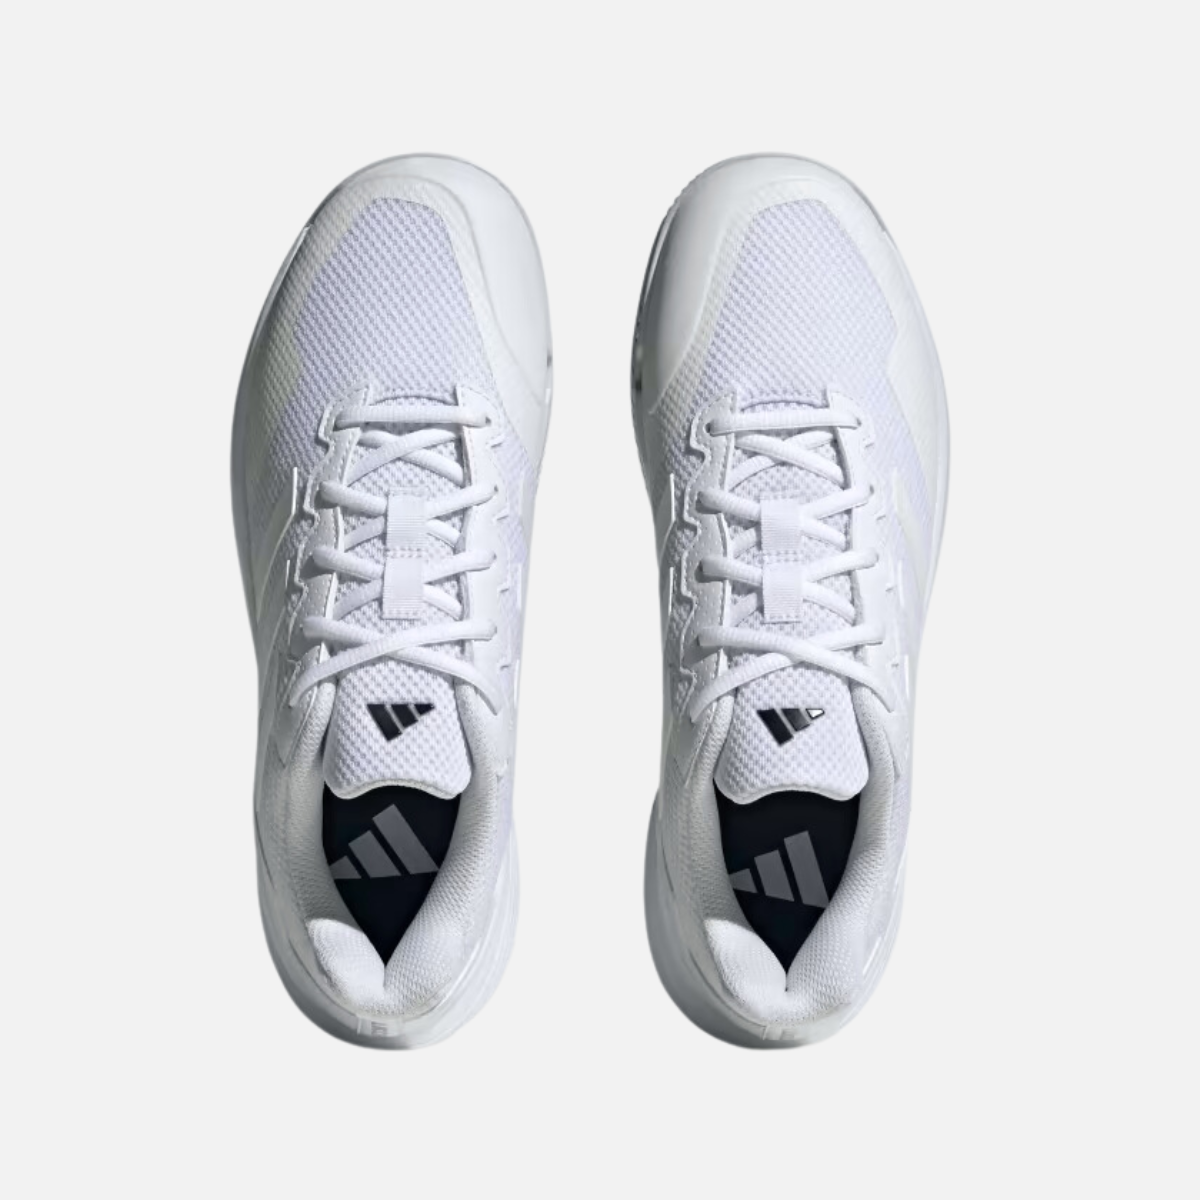 Adidas GAMECOURT 2.0 Tennis Shoes -Cloud White/Cloud White/Matte Silver